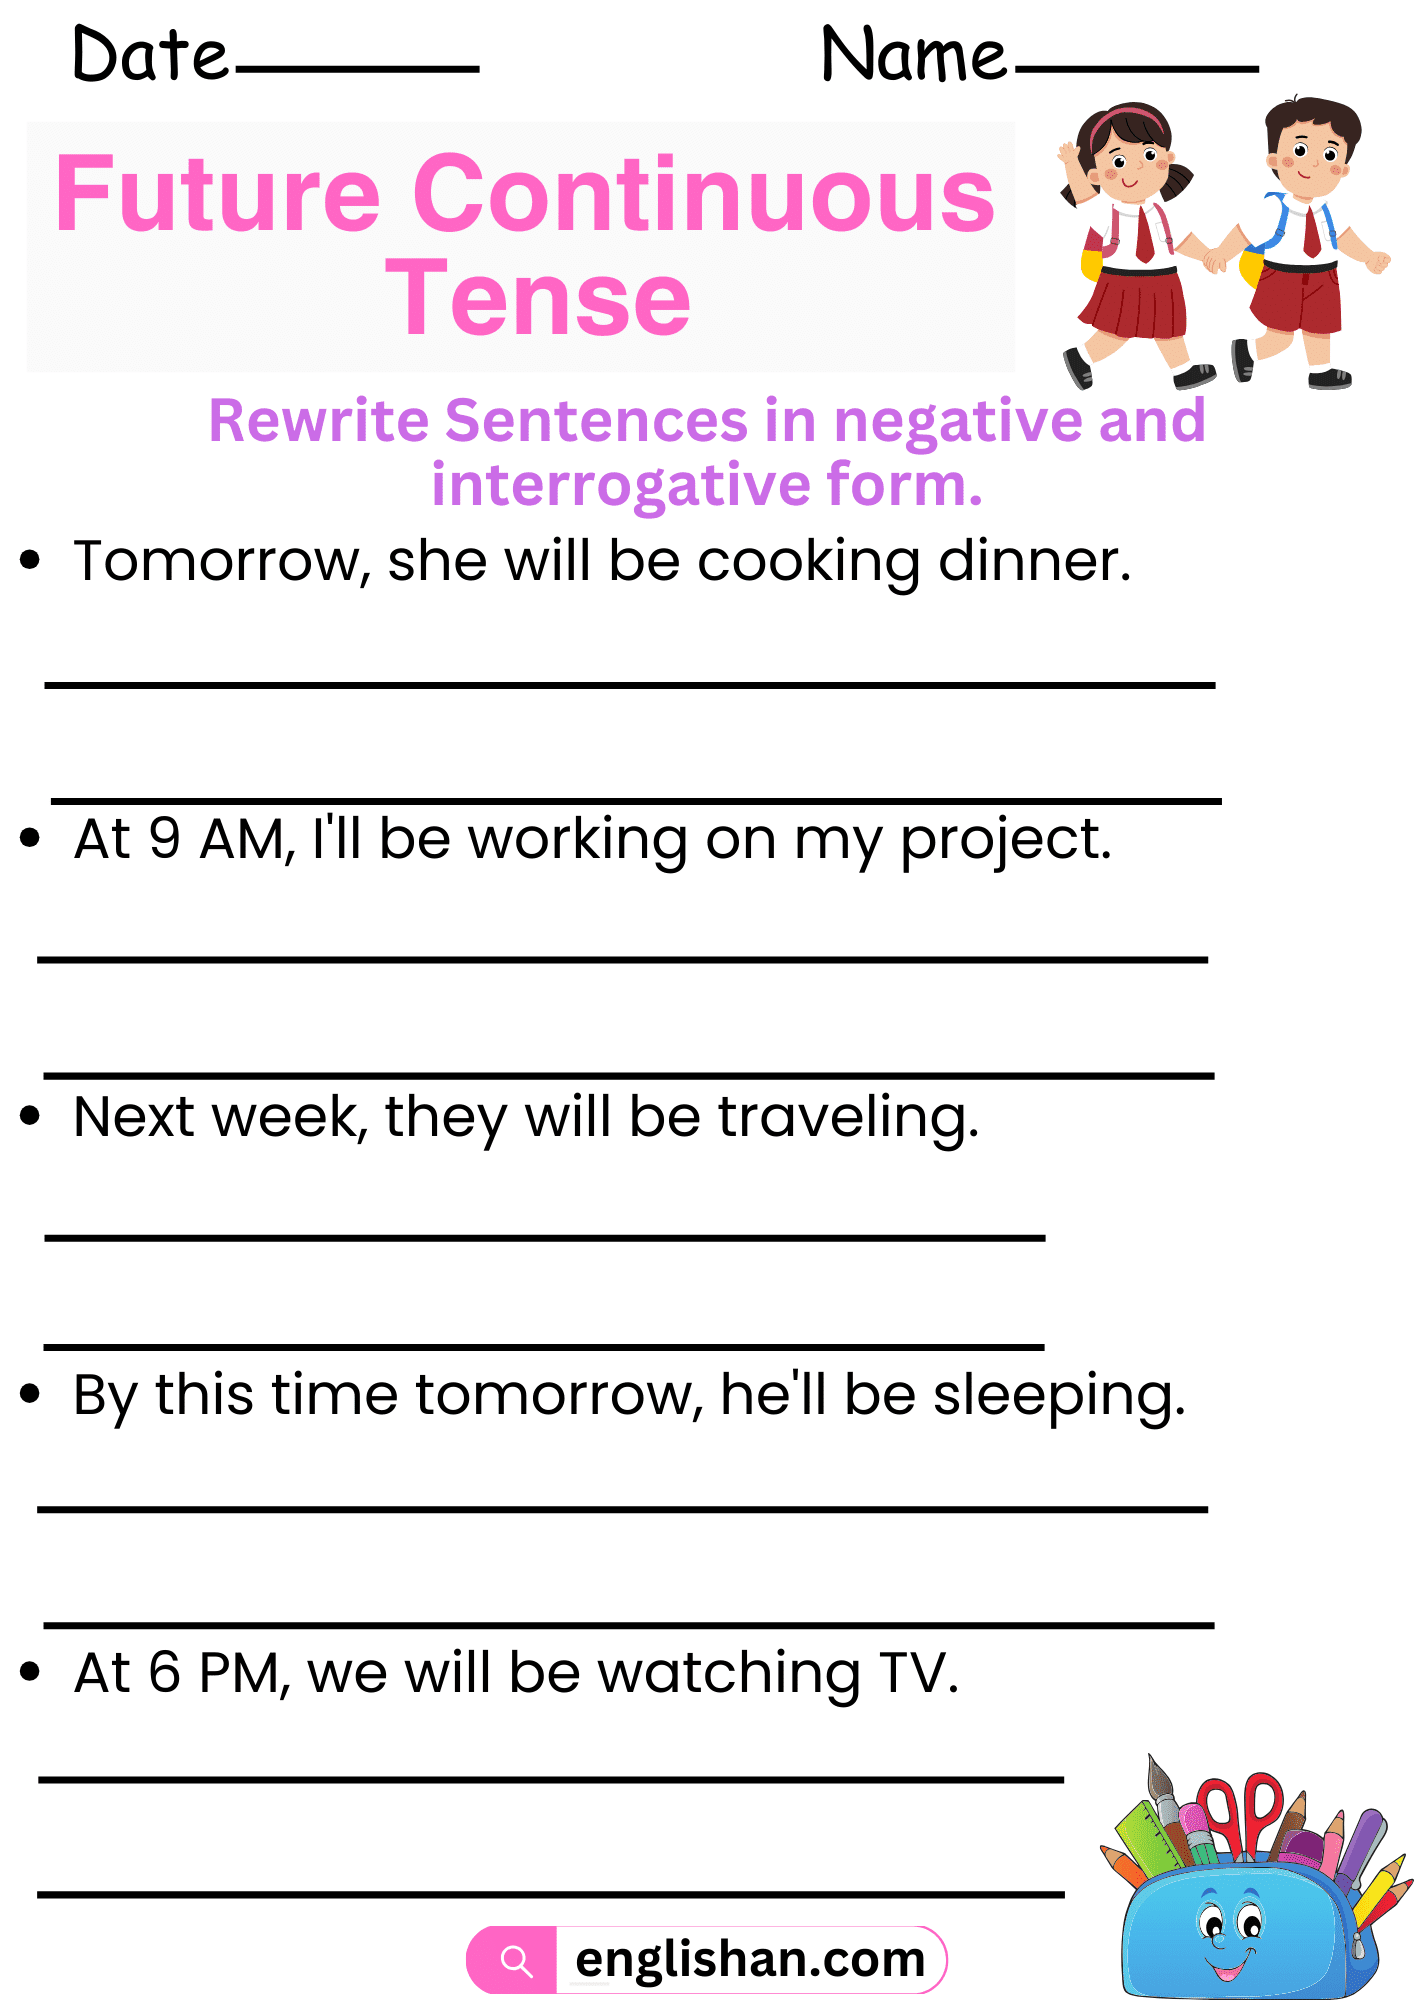 20 Sentences using Future Continuous tense Worksheet. Rewrite Sentences in Negative and Interrogative form.